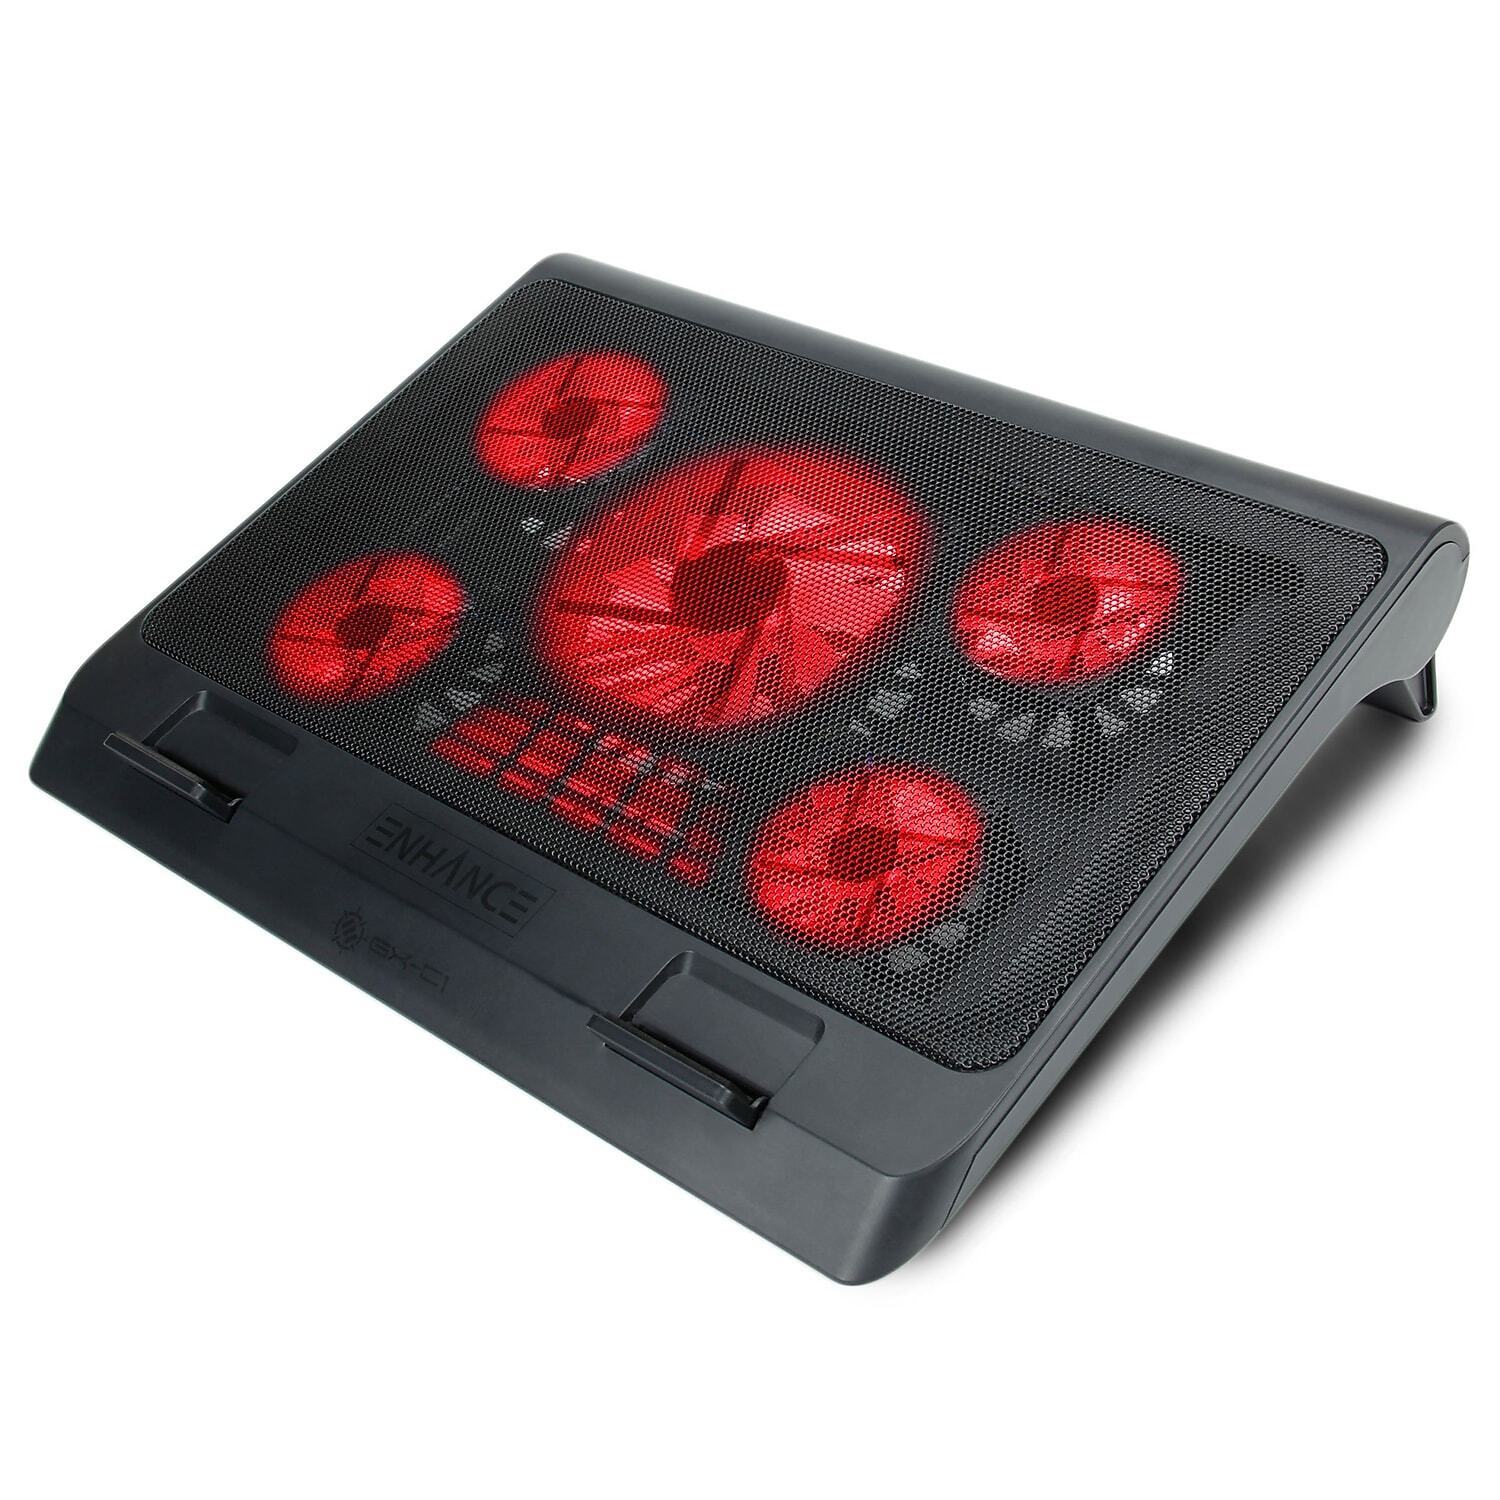 Enhance XL Gaming Laptop Cooler Pad with 5 Oversized LED Fans 2 USB Ports Black